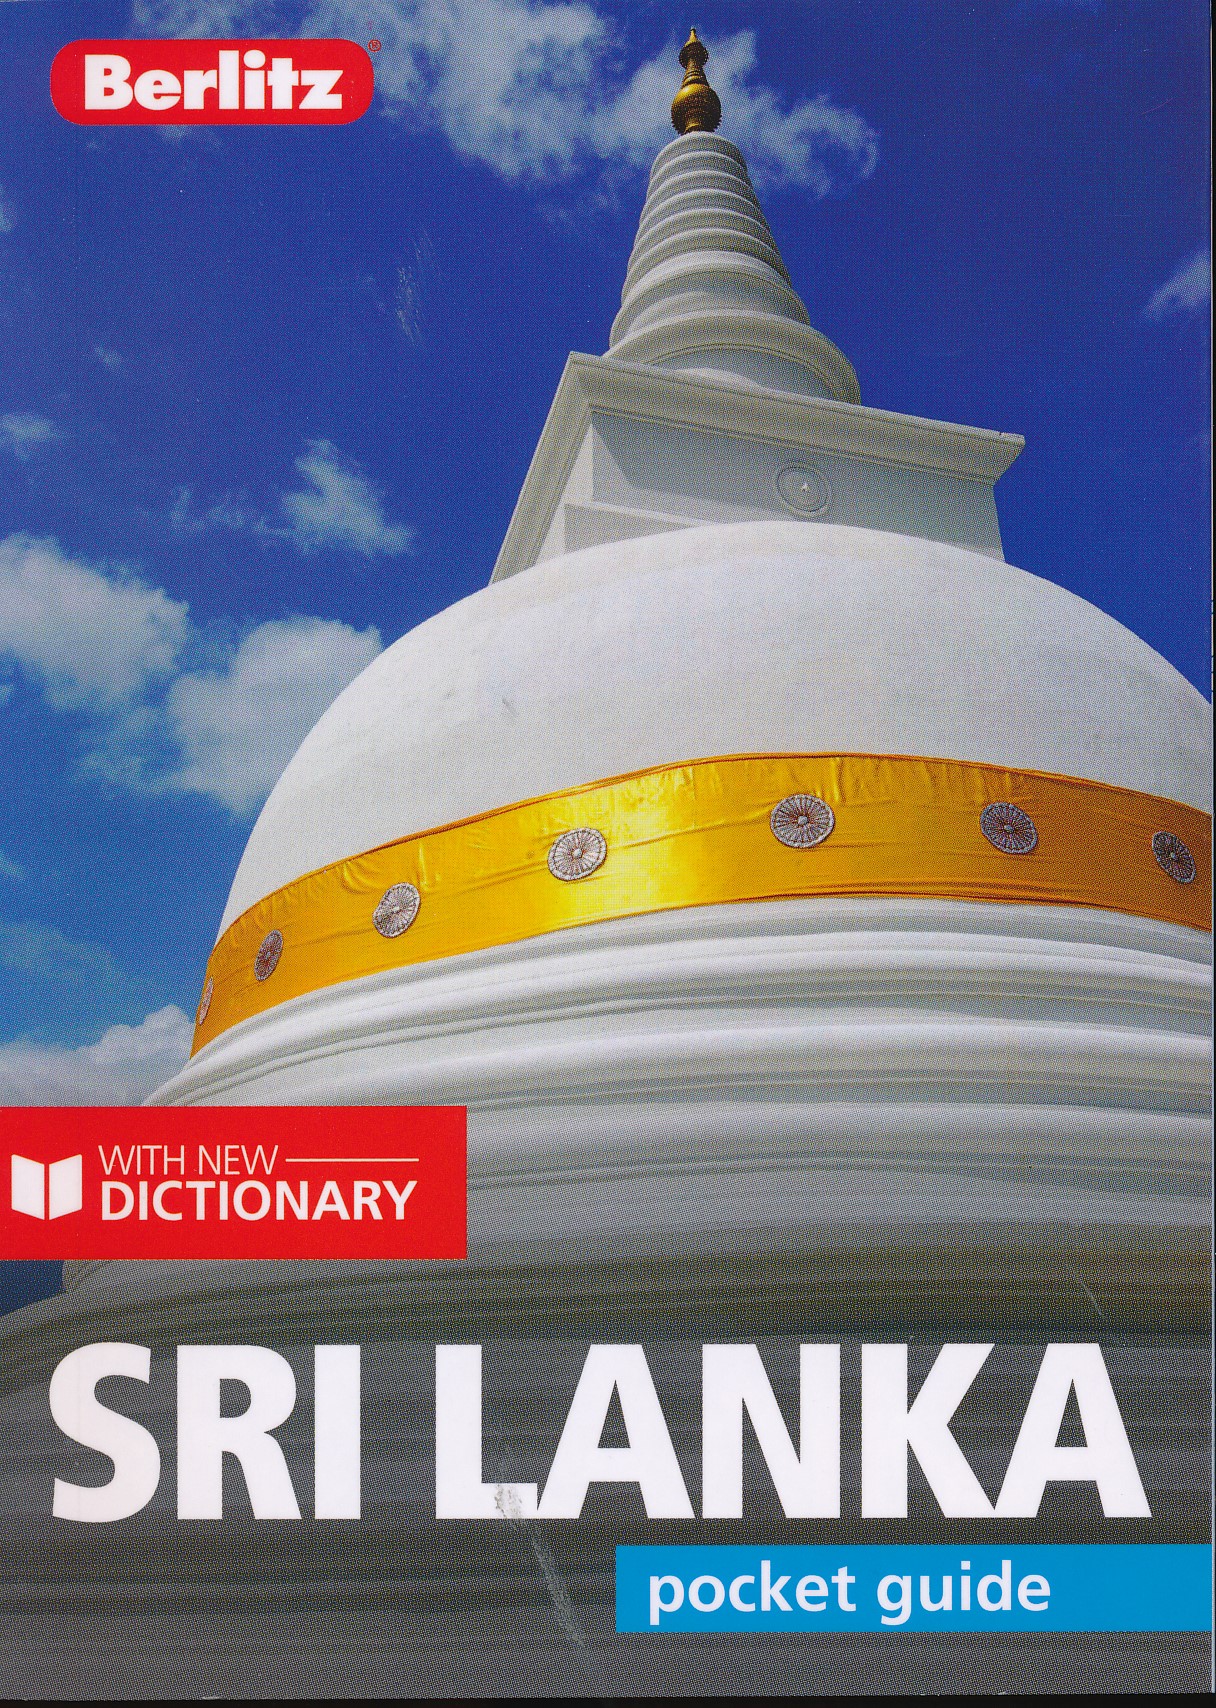 Online bestellen: Reisgids Pocket Guide Sri Lanka | Berlitz